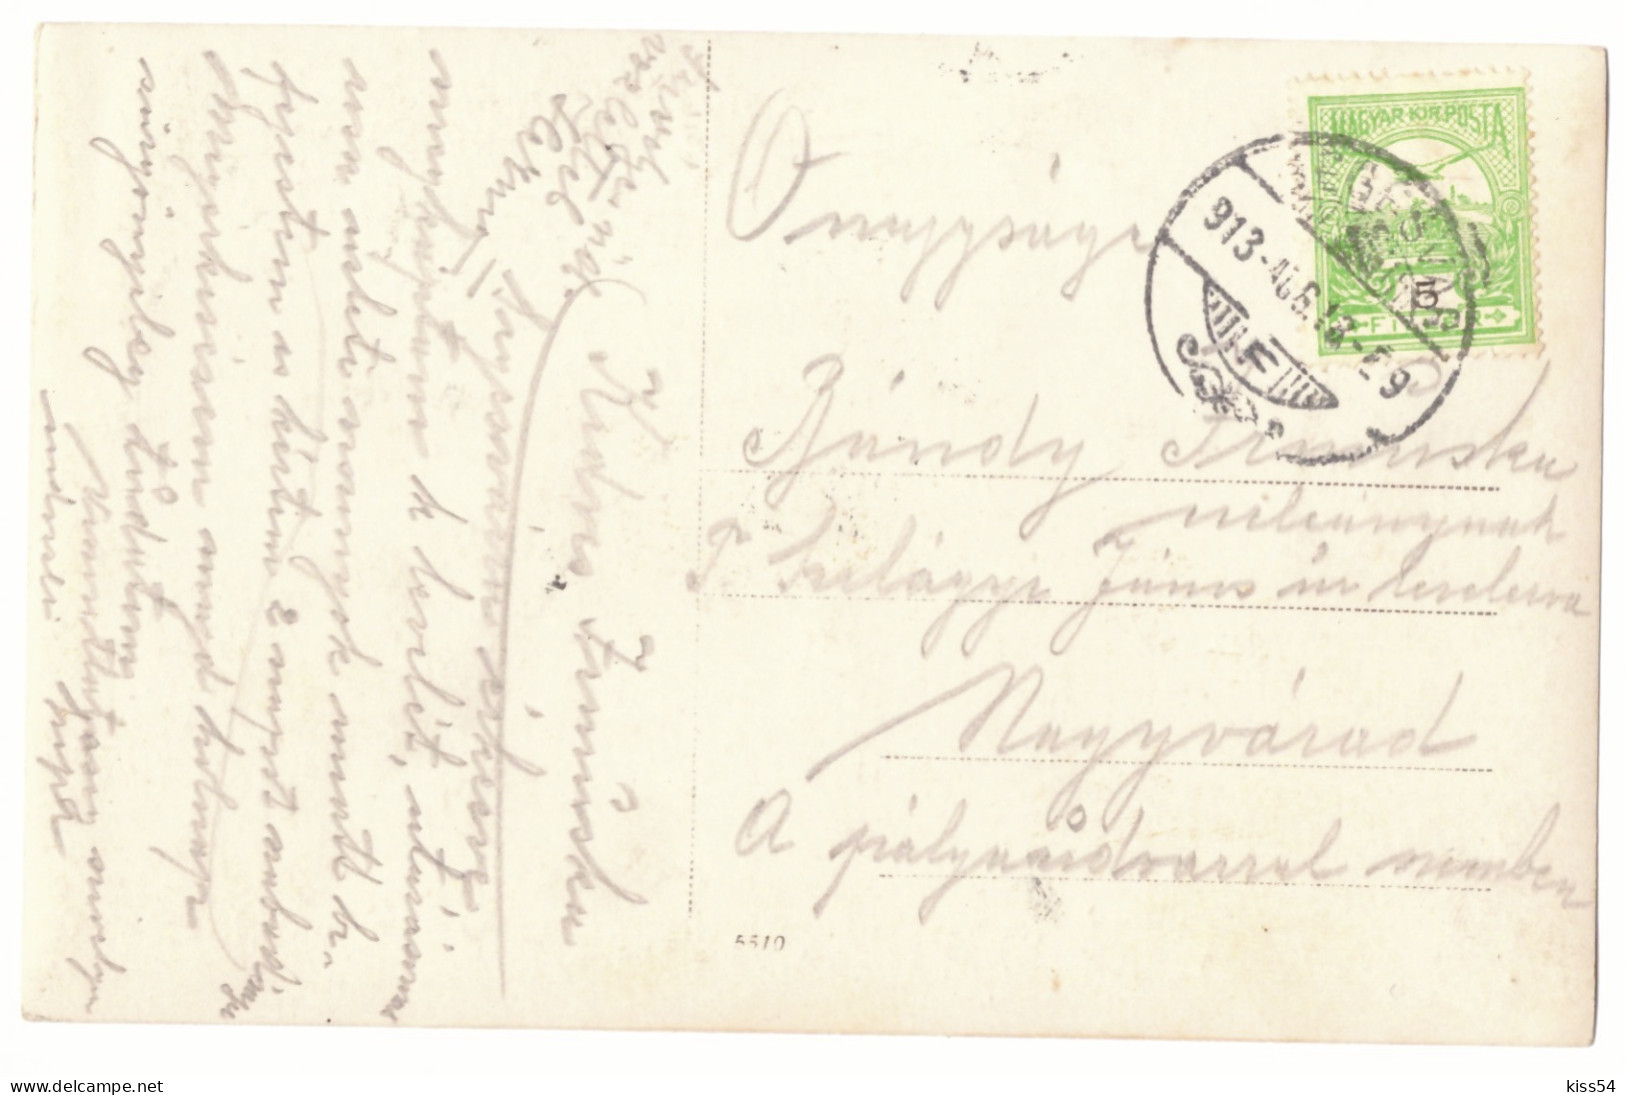 RO 38 - 18226 SIGHISOARA, Mures, Romania - Old Postcard, Real PHOTO - Used - 1913 - Roumanie